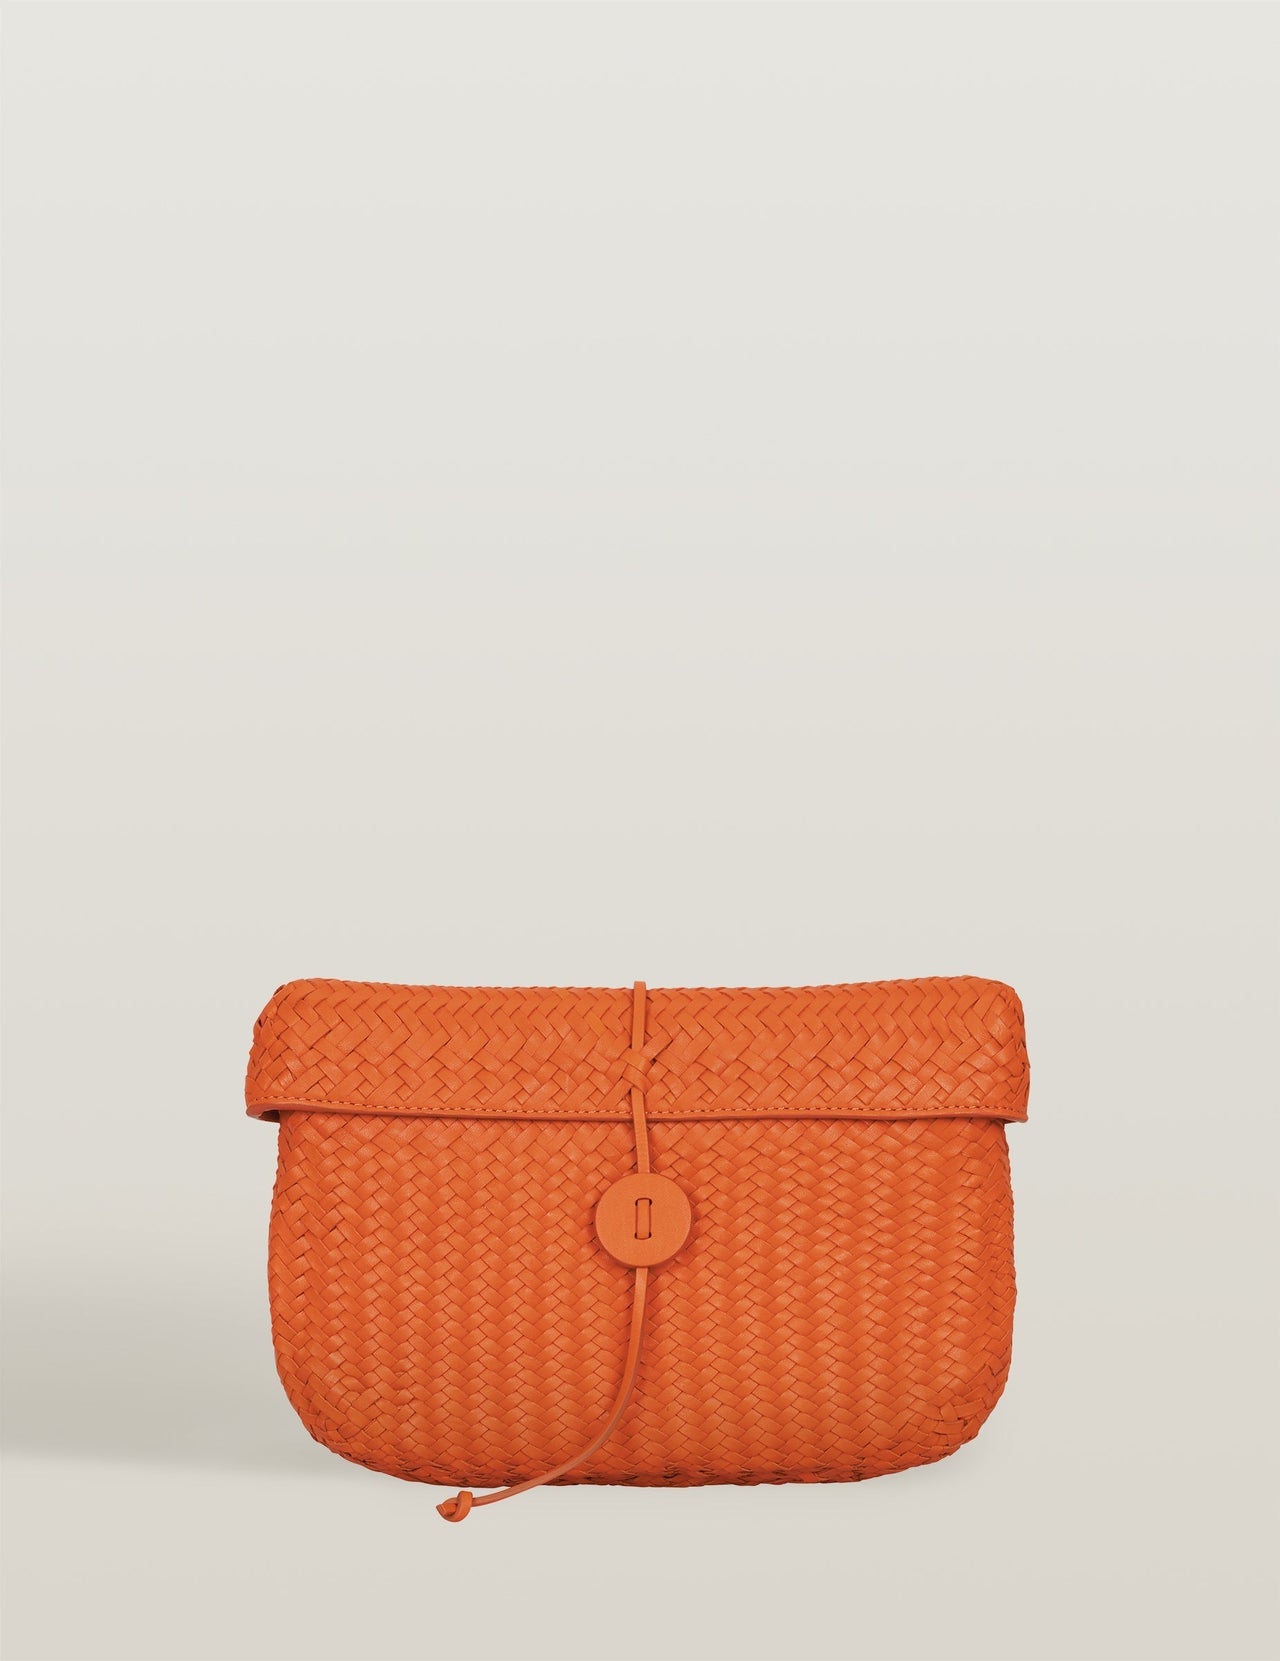  Orange Handwoven Leather Clutch Bag 